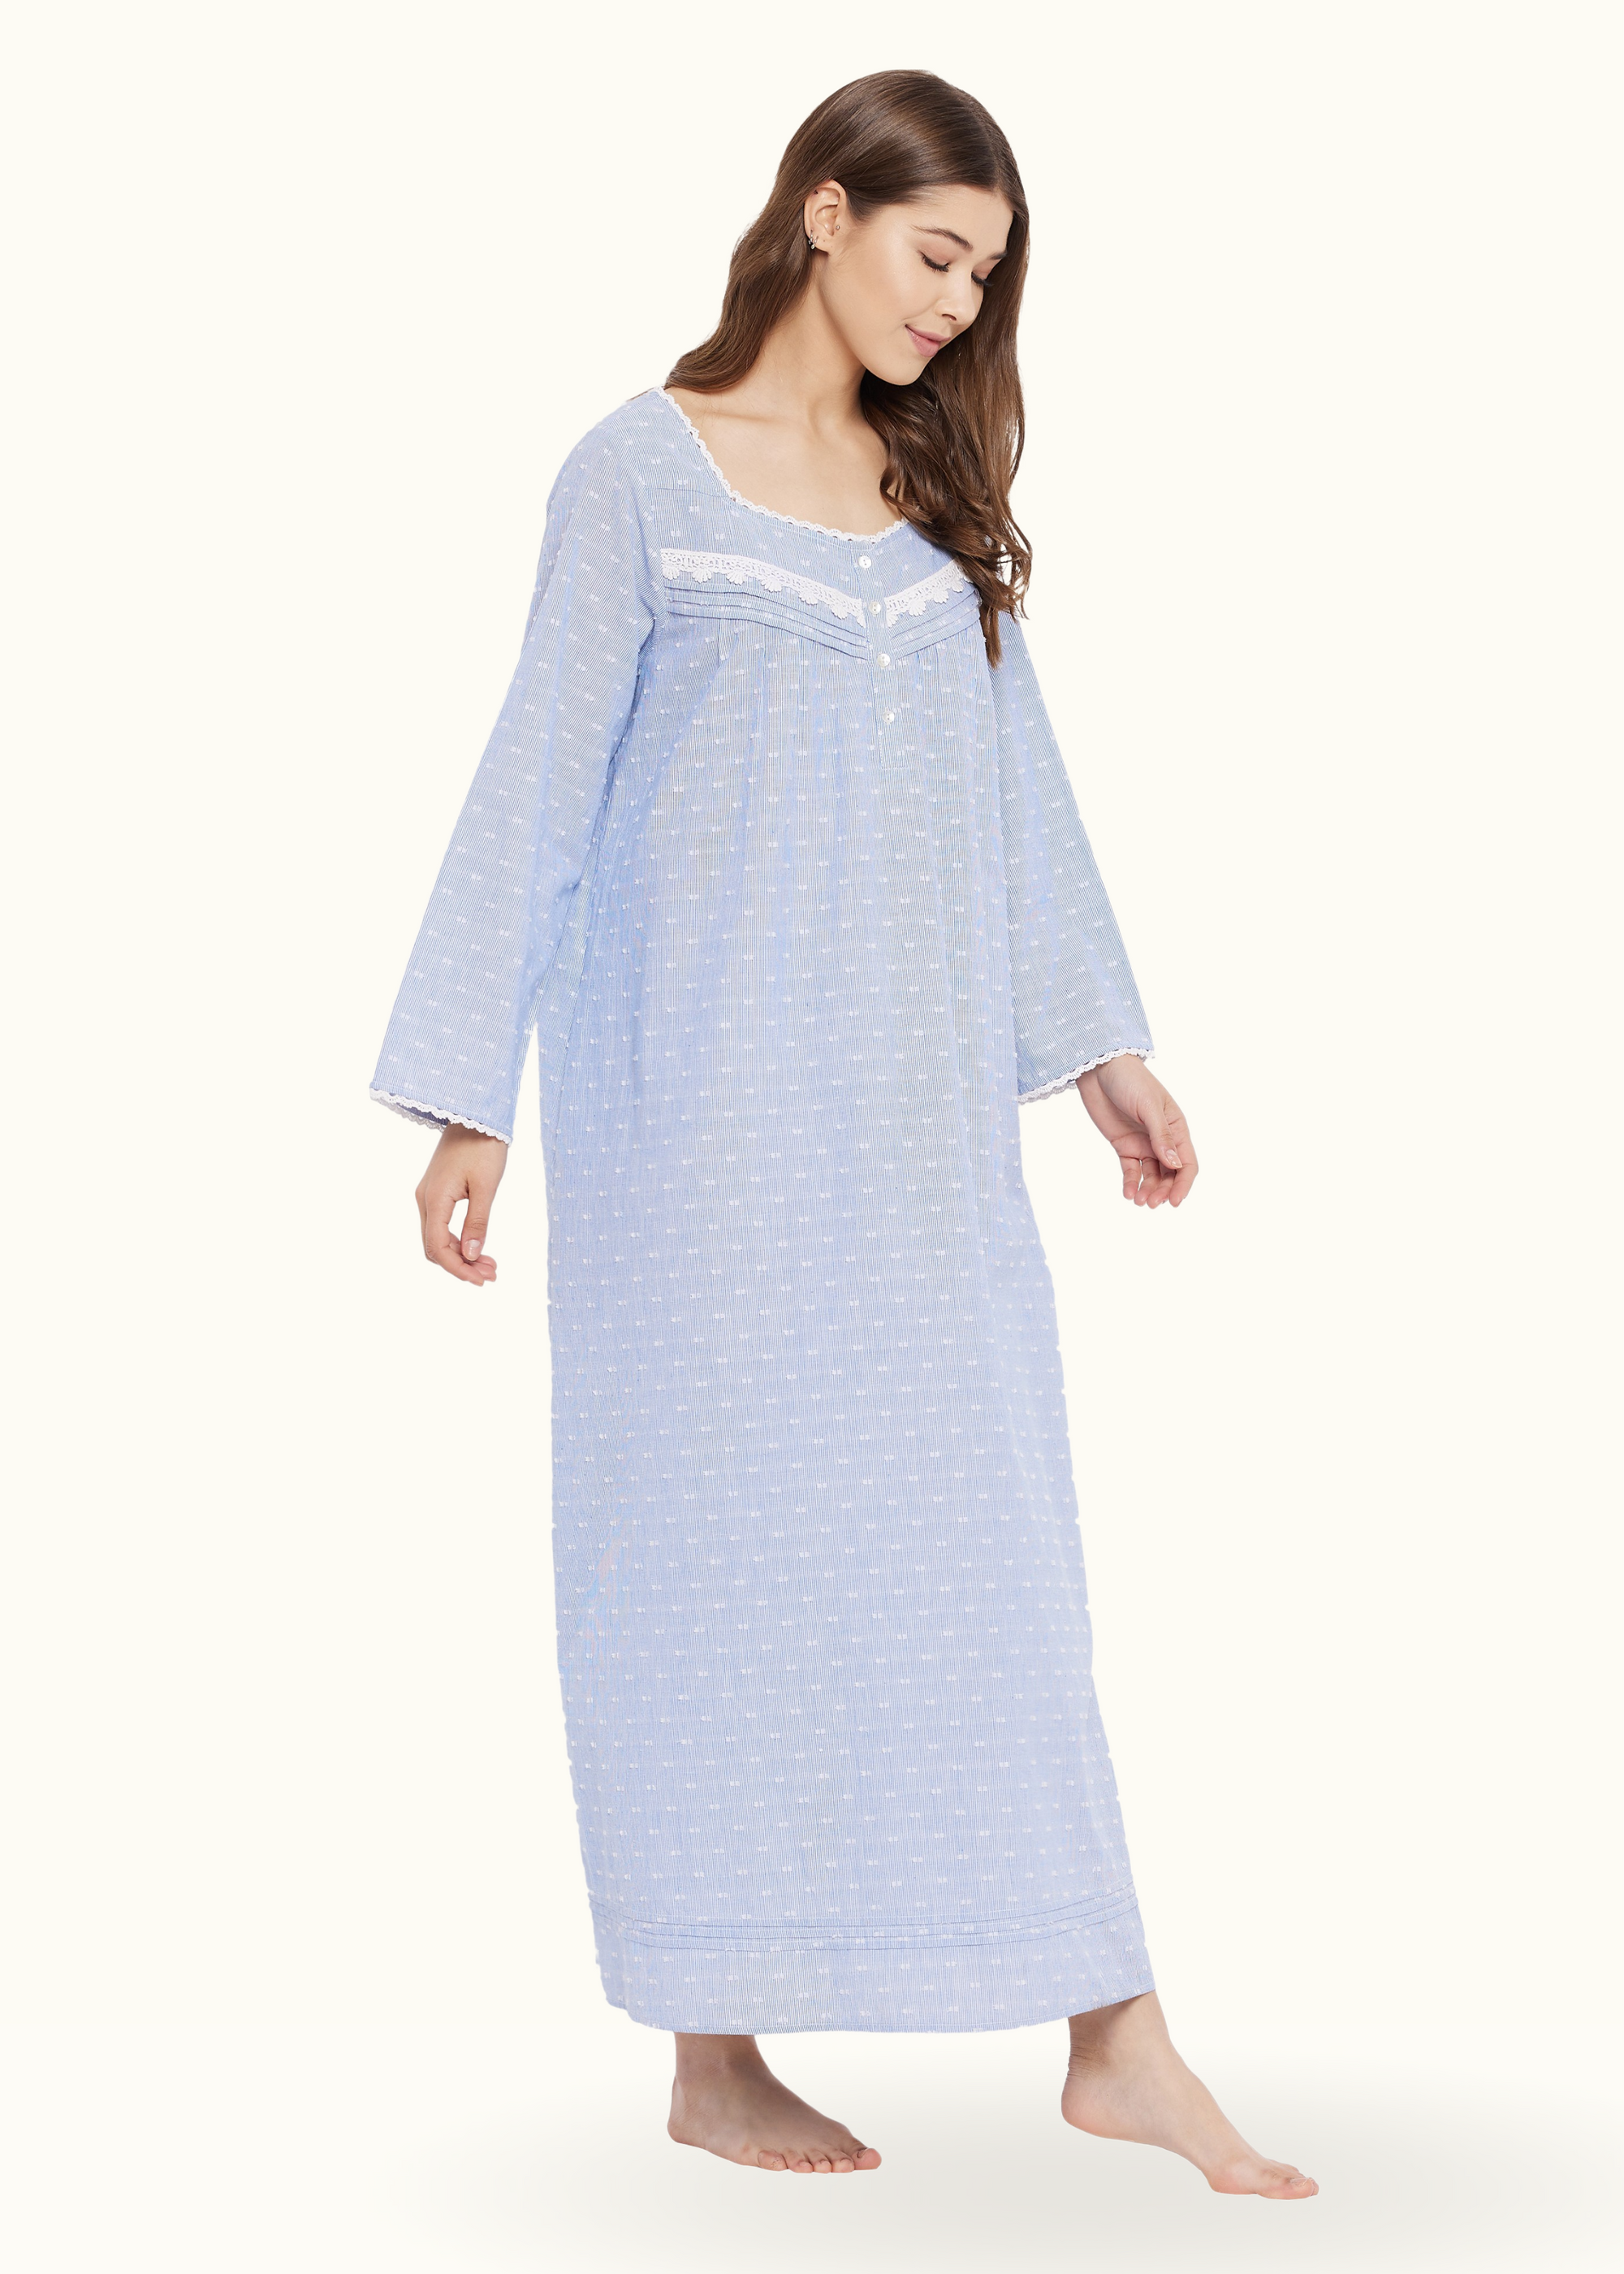 Zoey Cotton Lace Maxi Dress Gown  39.00 Indigo Paisley